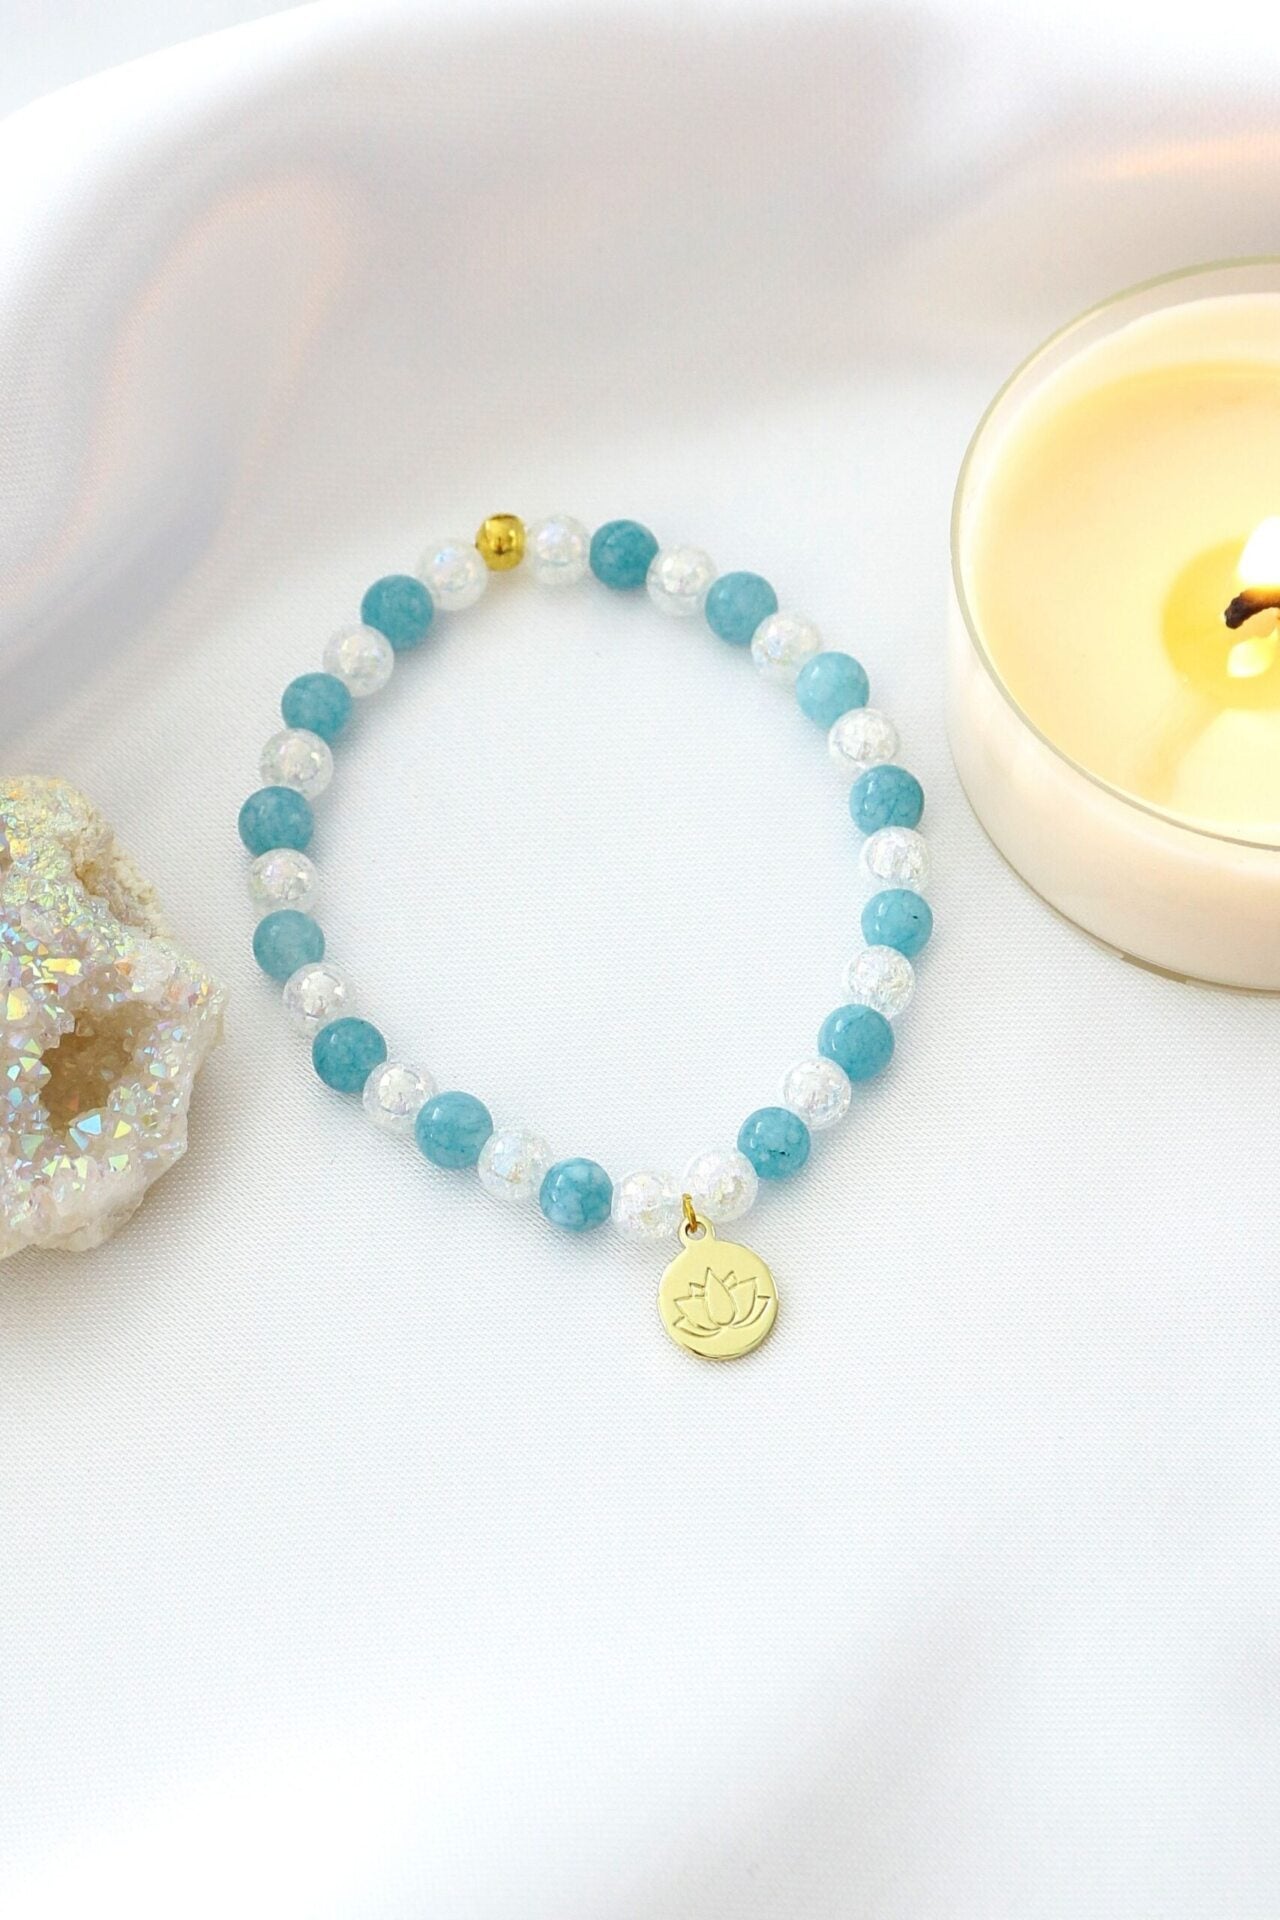 Aquamarine Elastic Bracelet with Lotus Flower Charm - Natural Stone Beads, Handmade in Europe Bijou Her